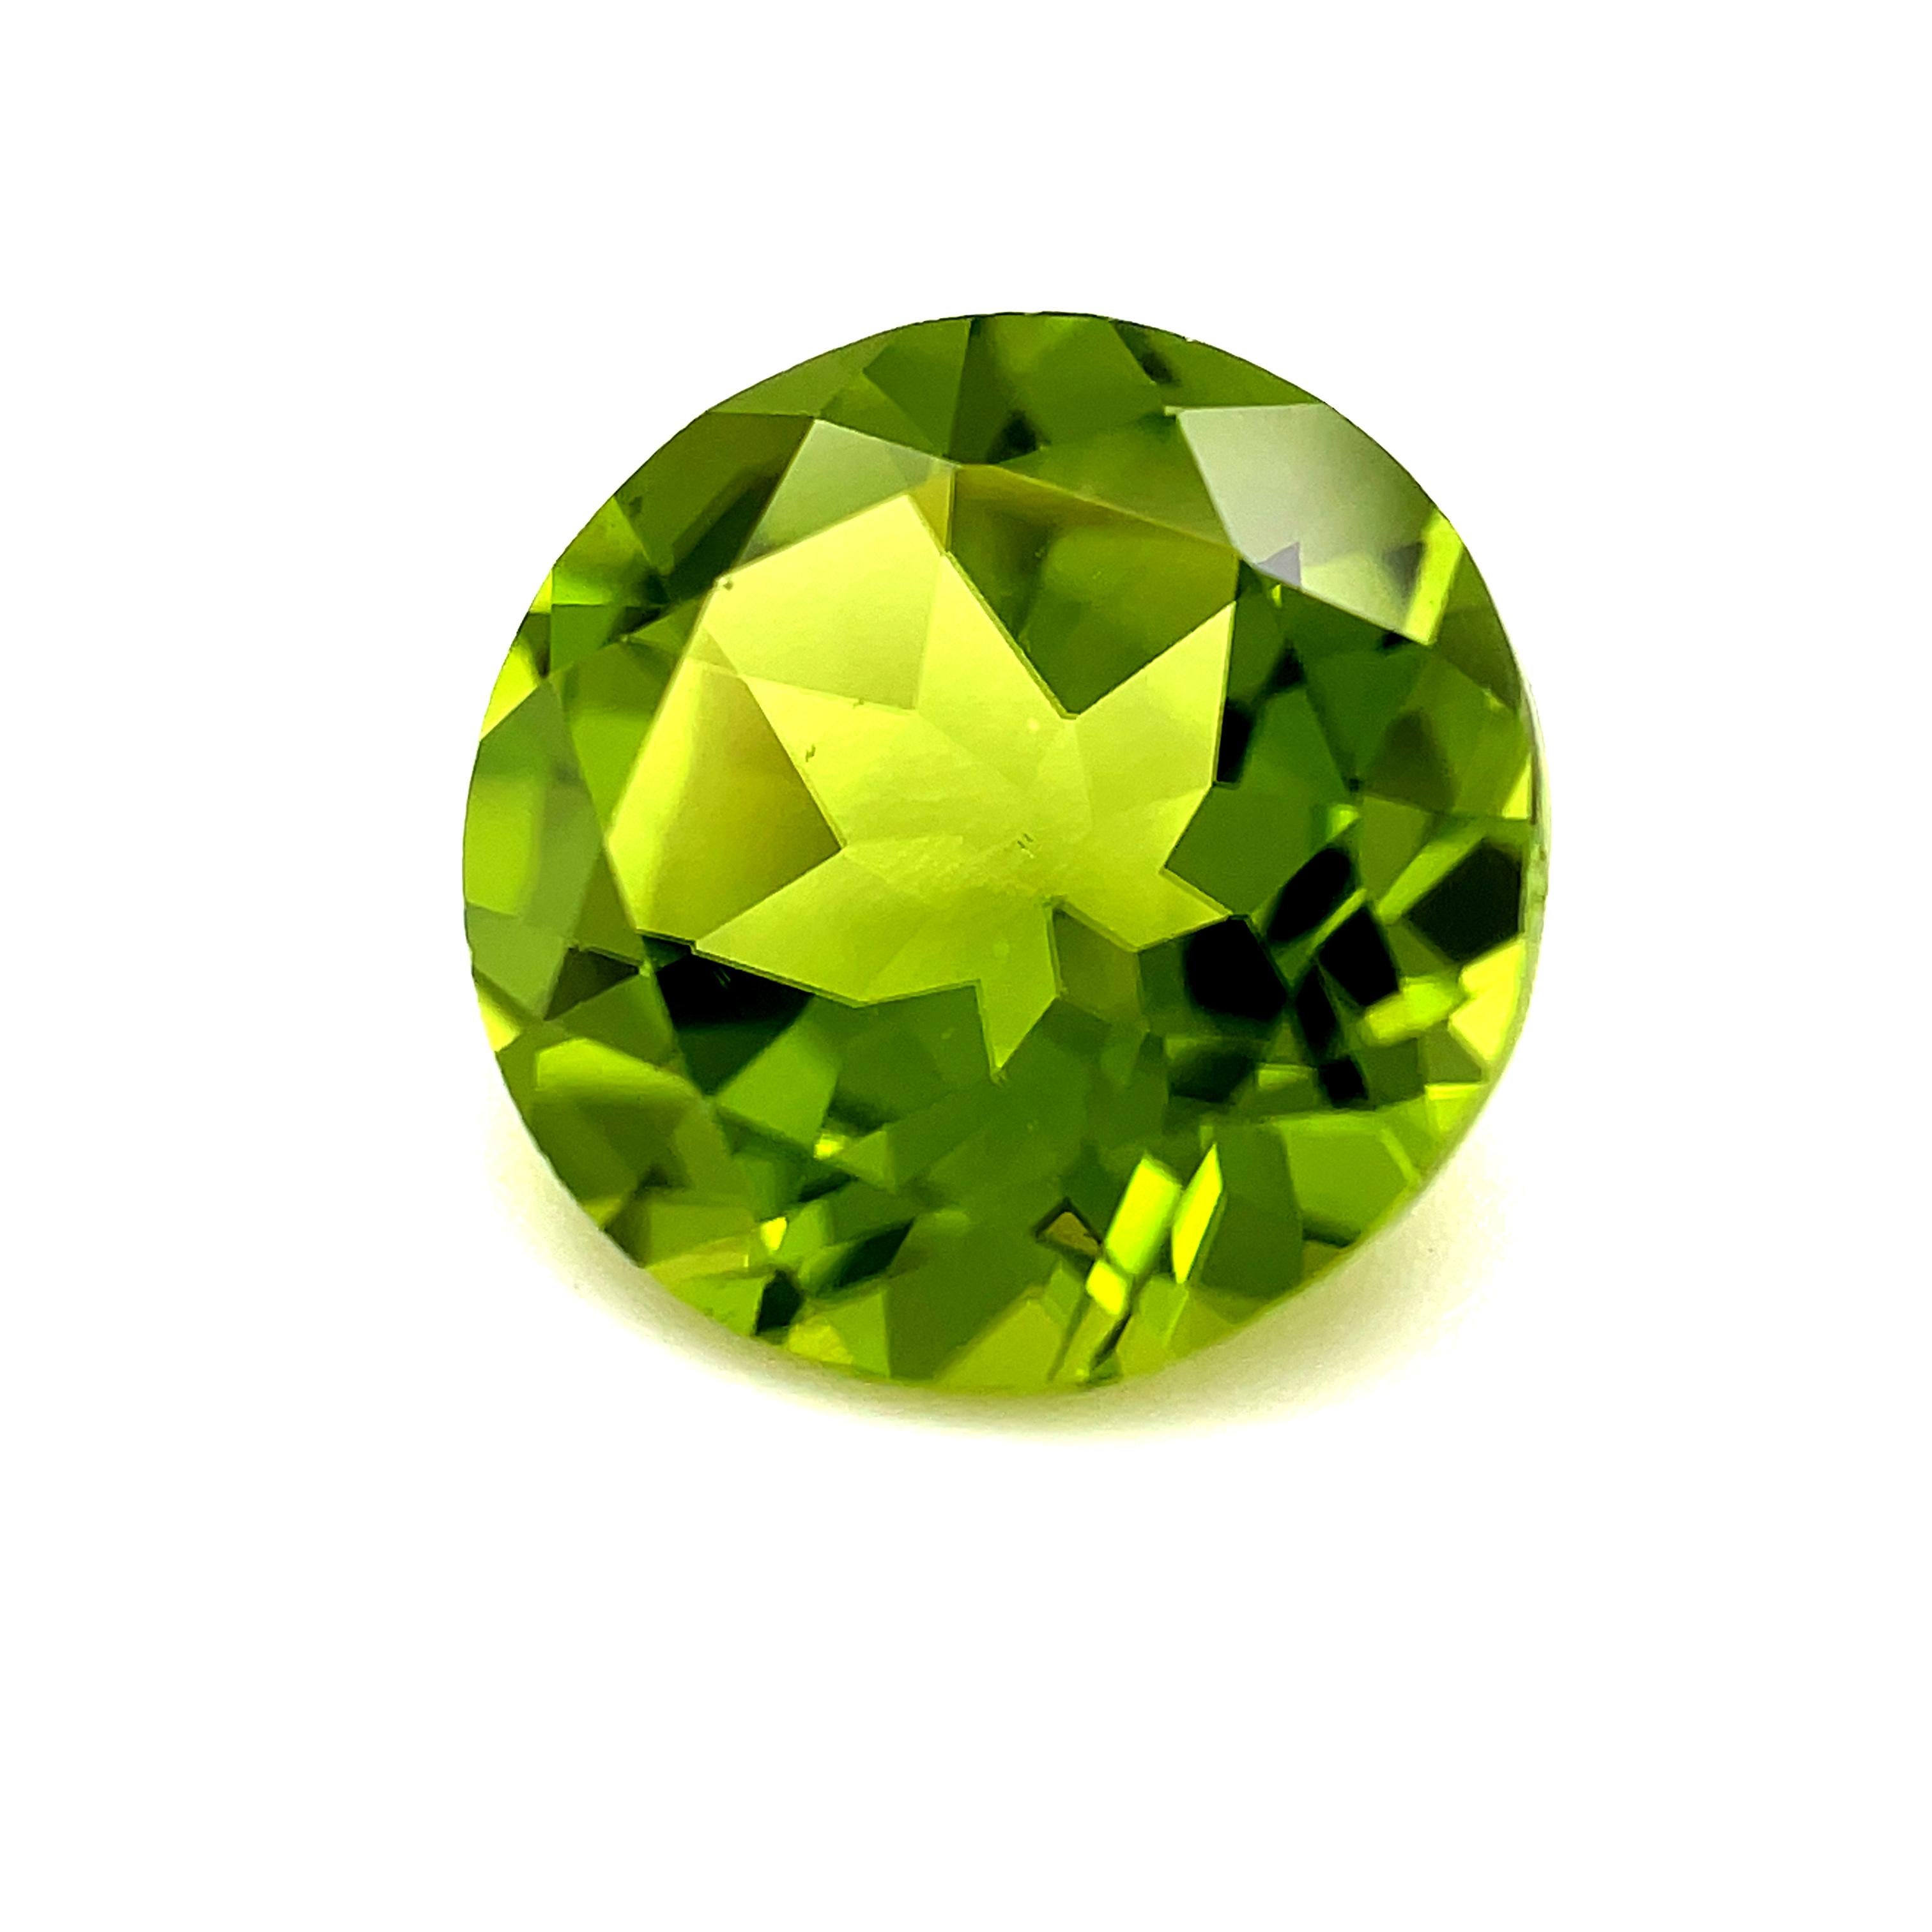 Women's or Men's 5.26 Carat Round Apple Green Peridot, Unset Loose Gemstone For Sale